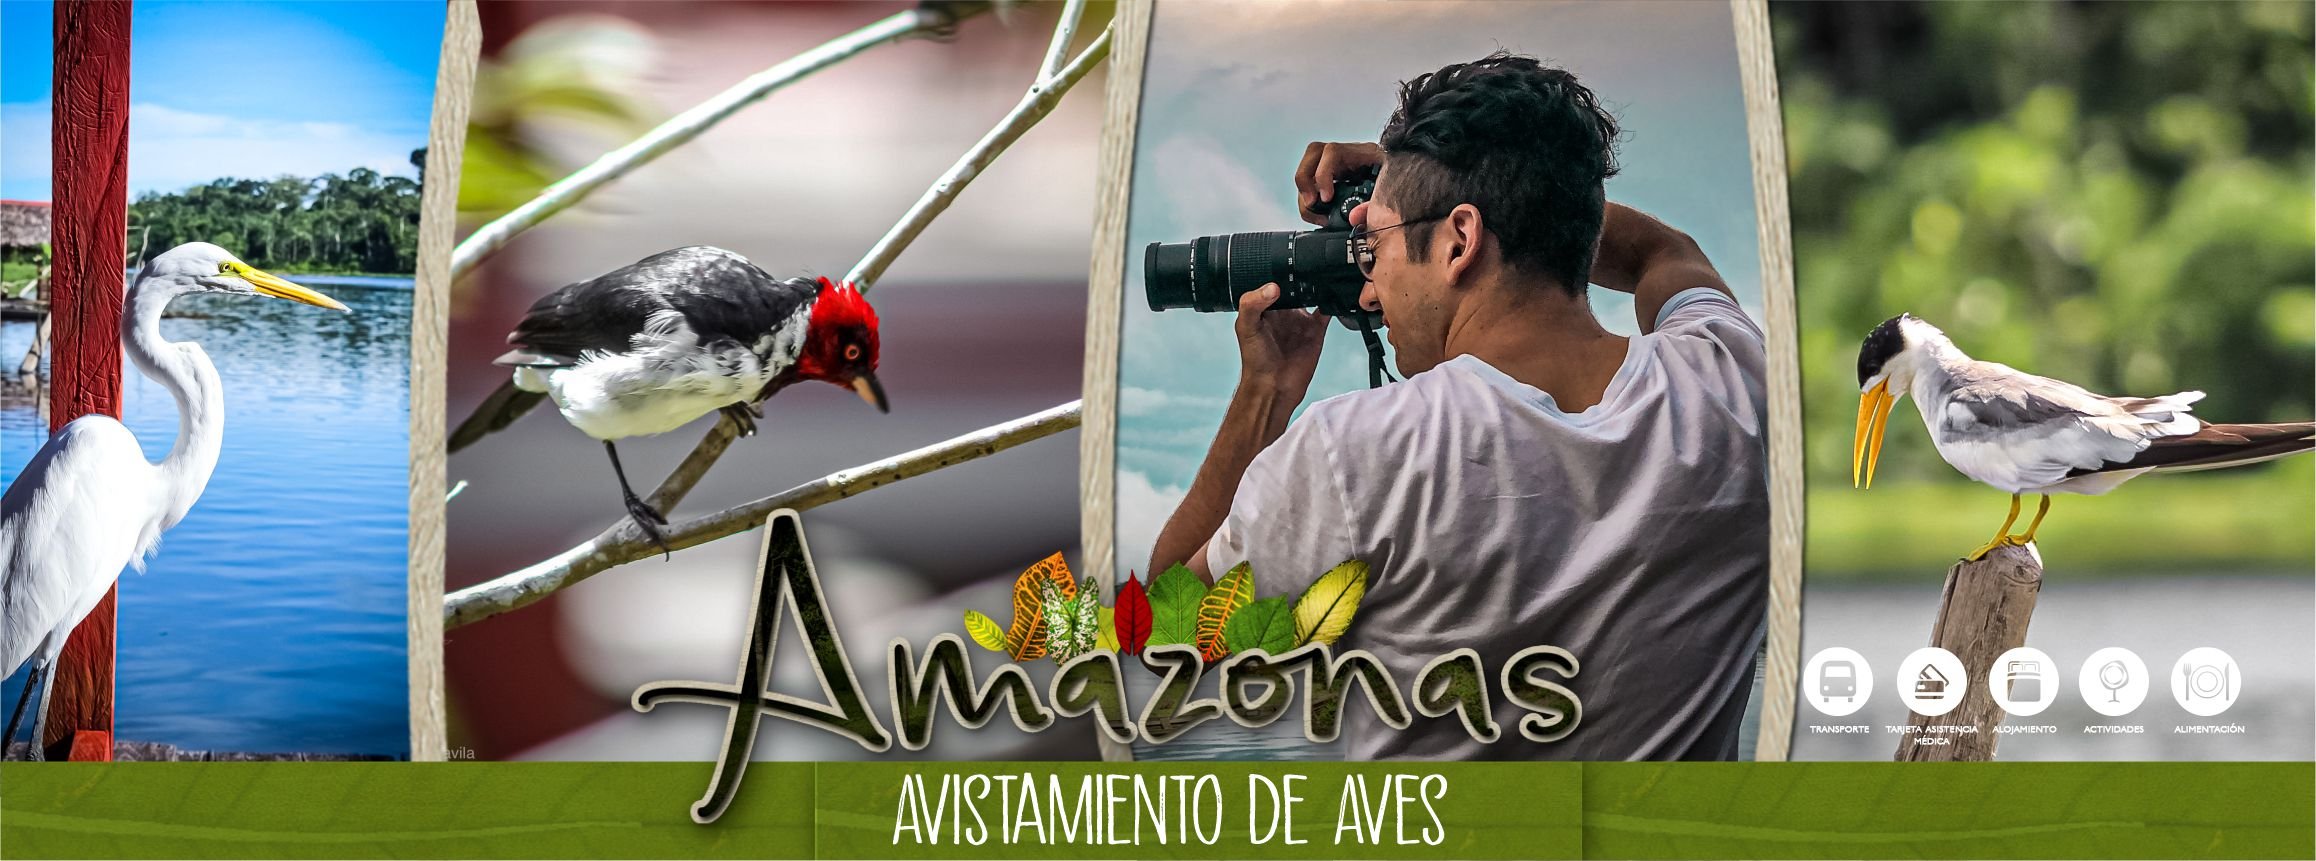 Avistamiento de aves Amazonas